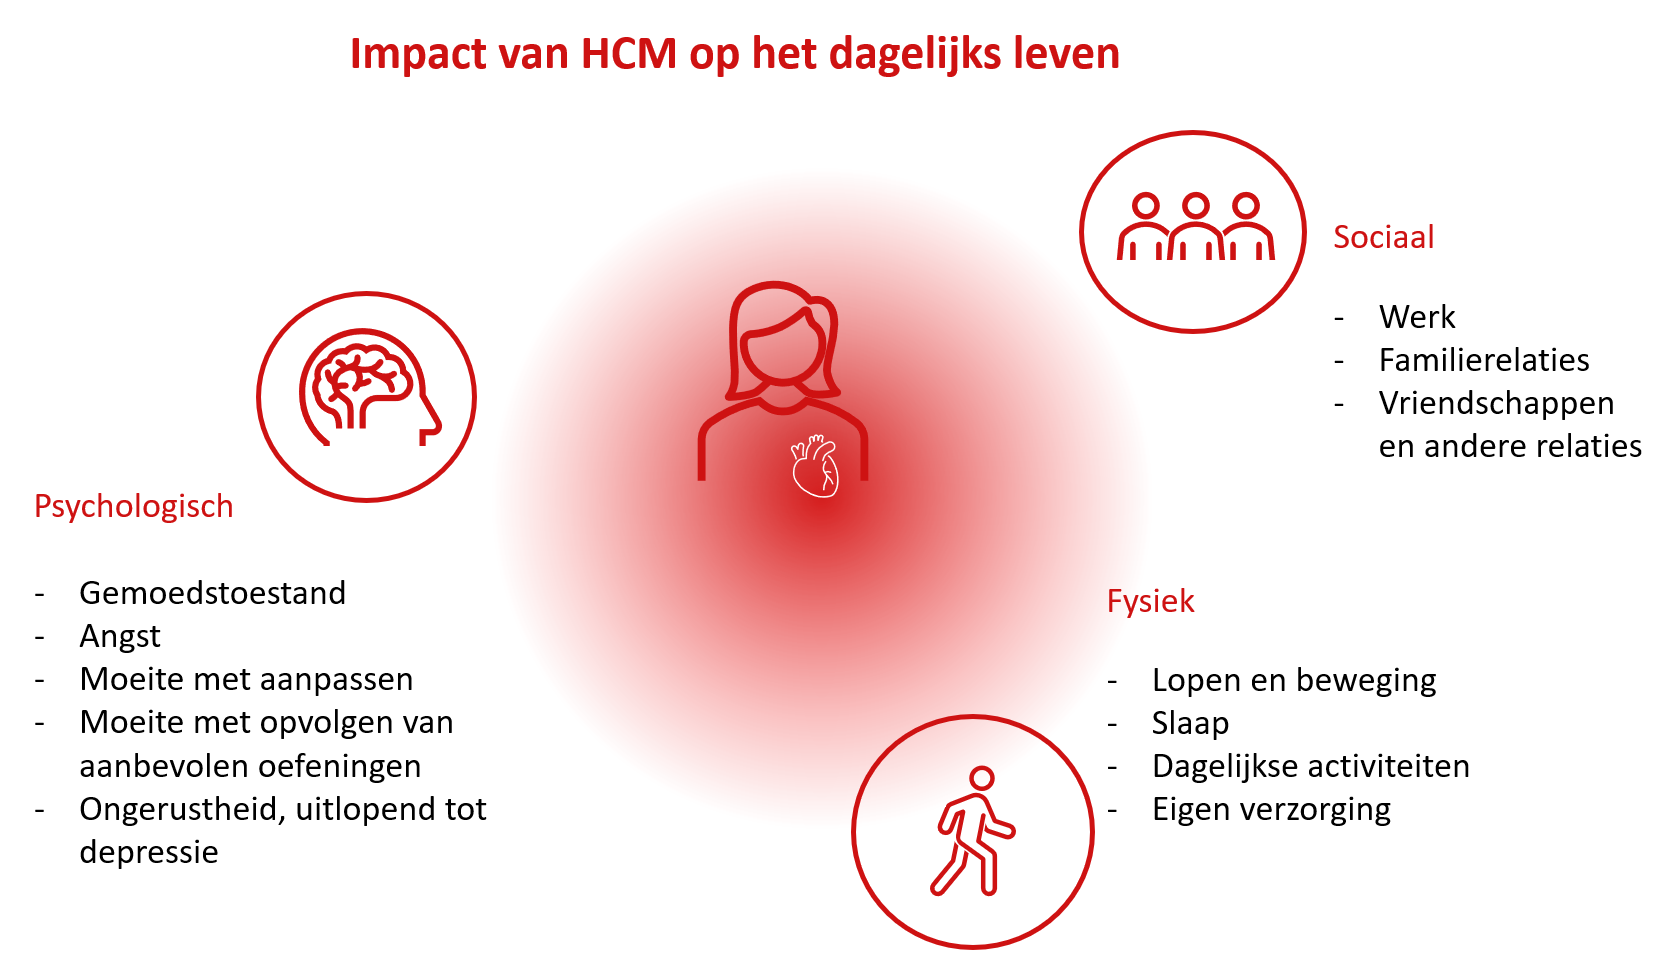  impact HCM dagelijks leven.png